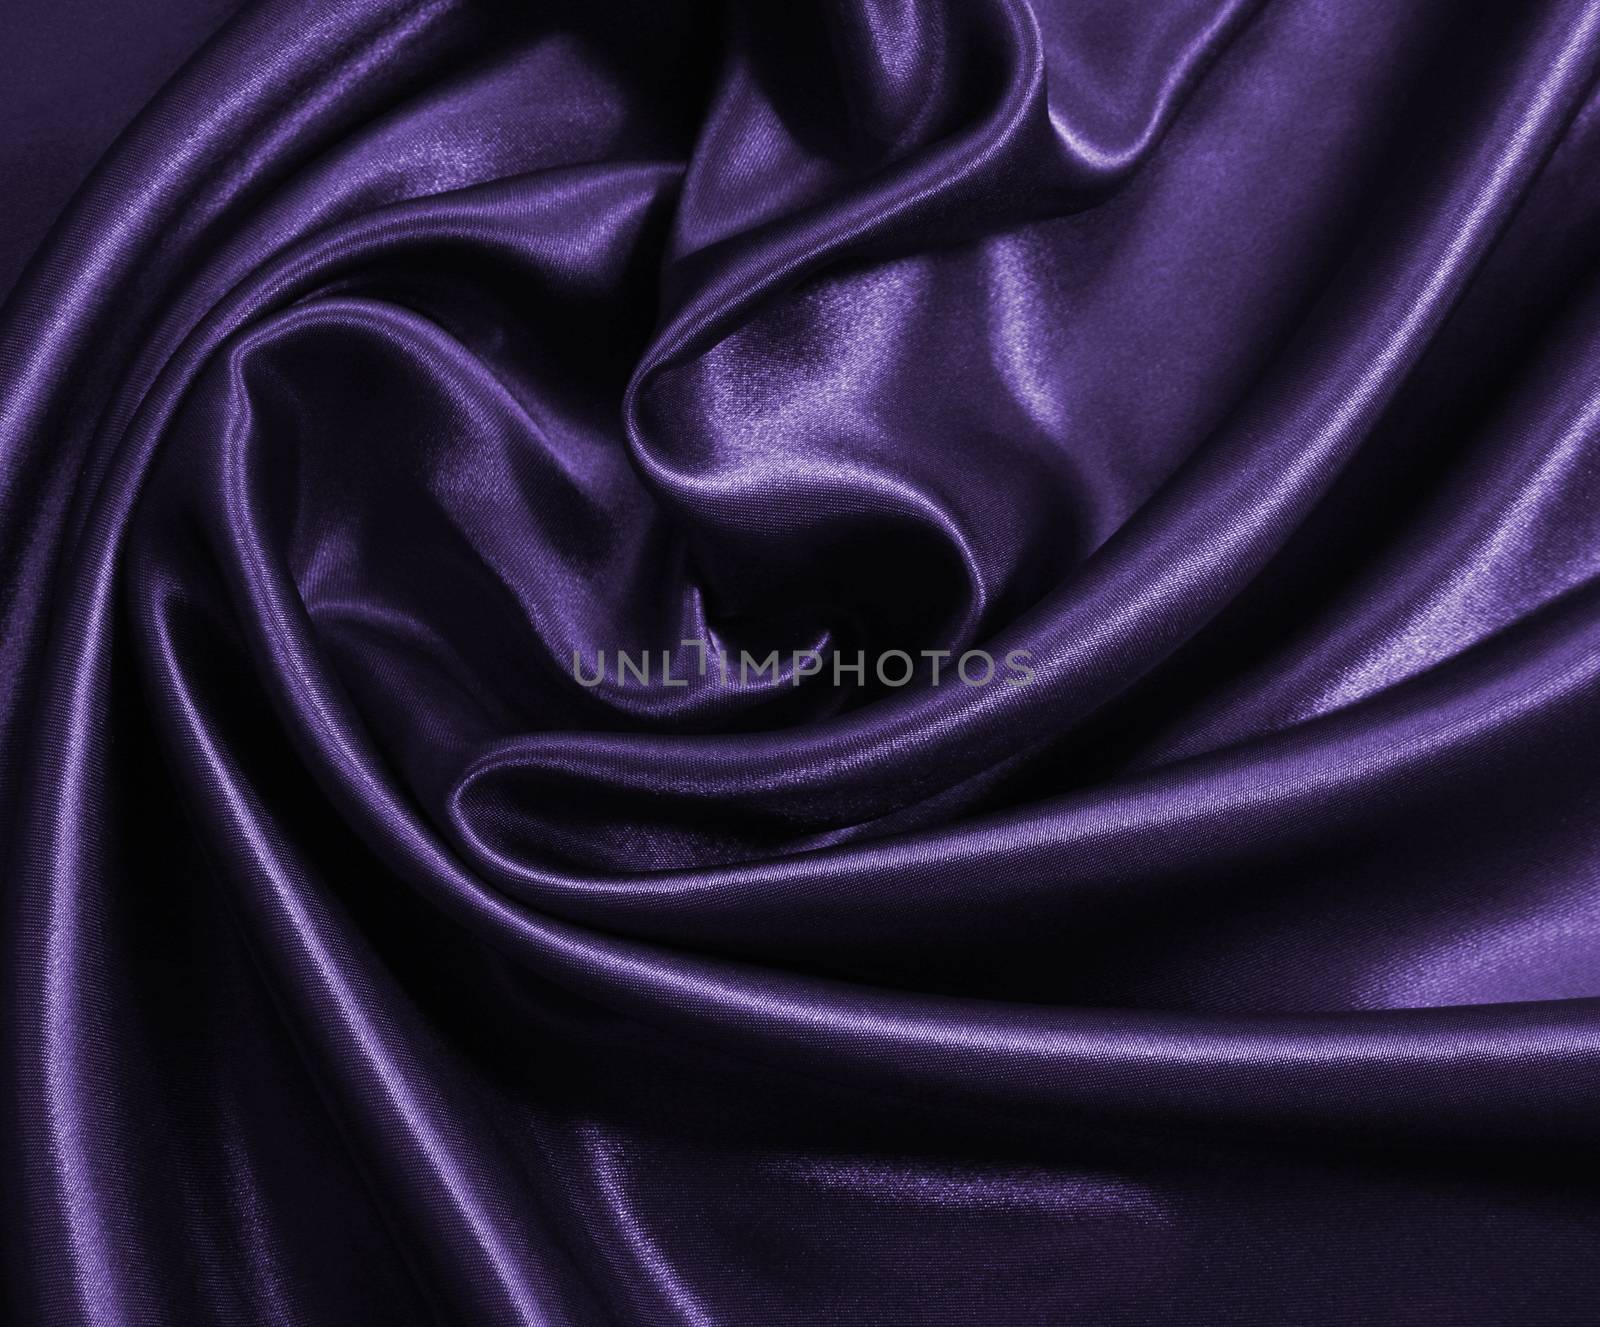 Smooth elegant lilac silk or satin as background 